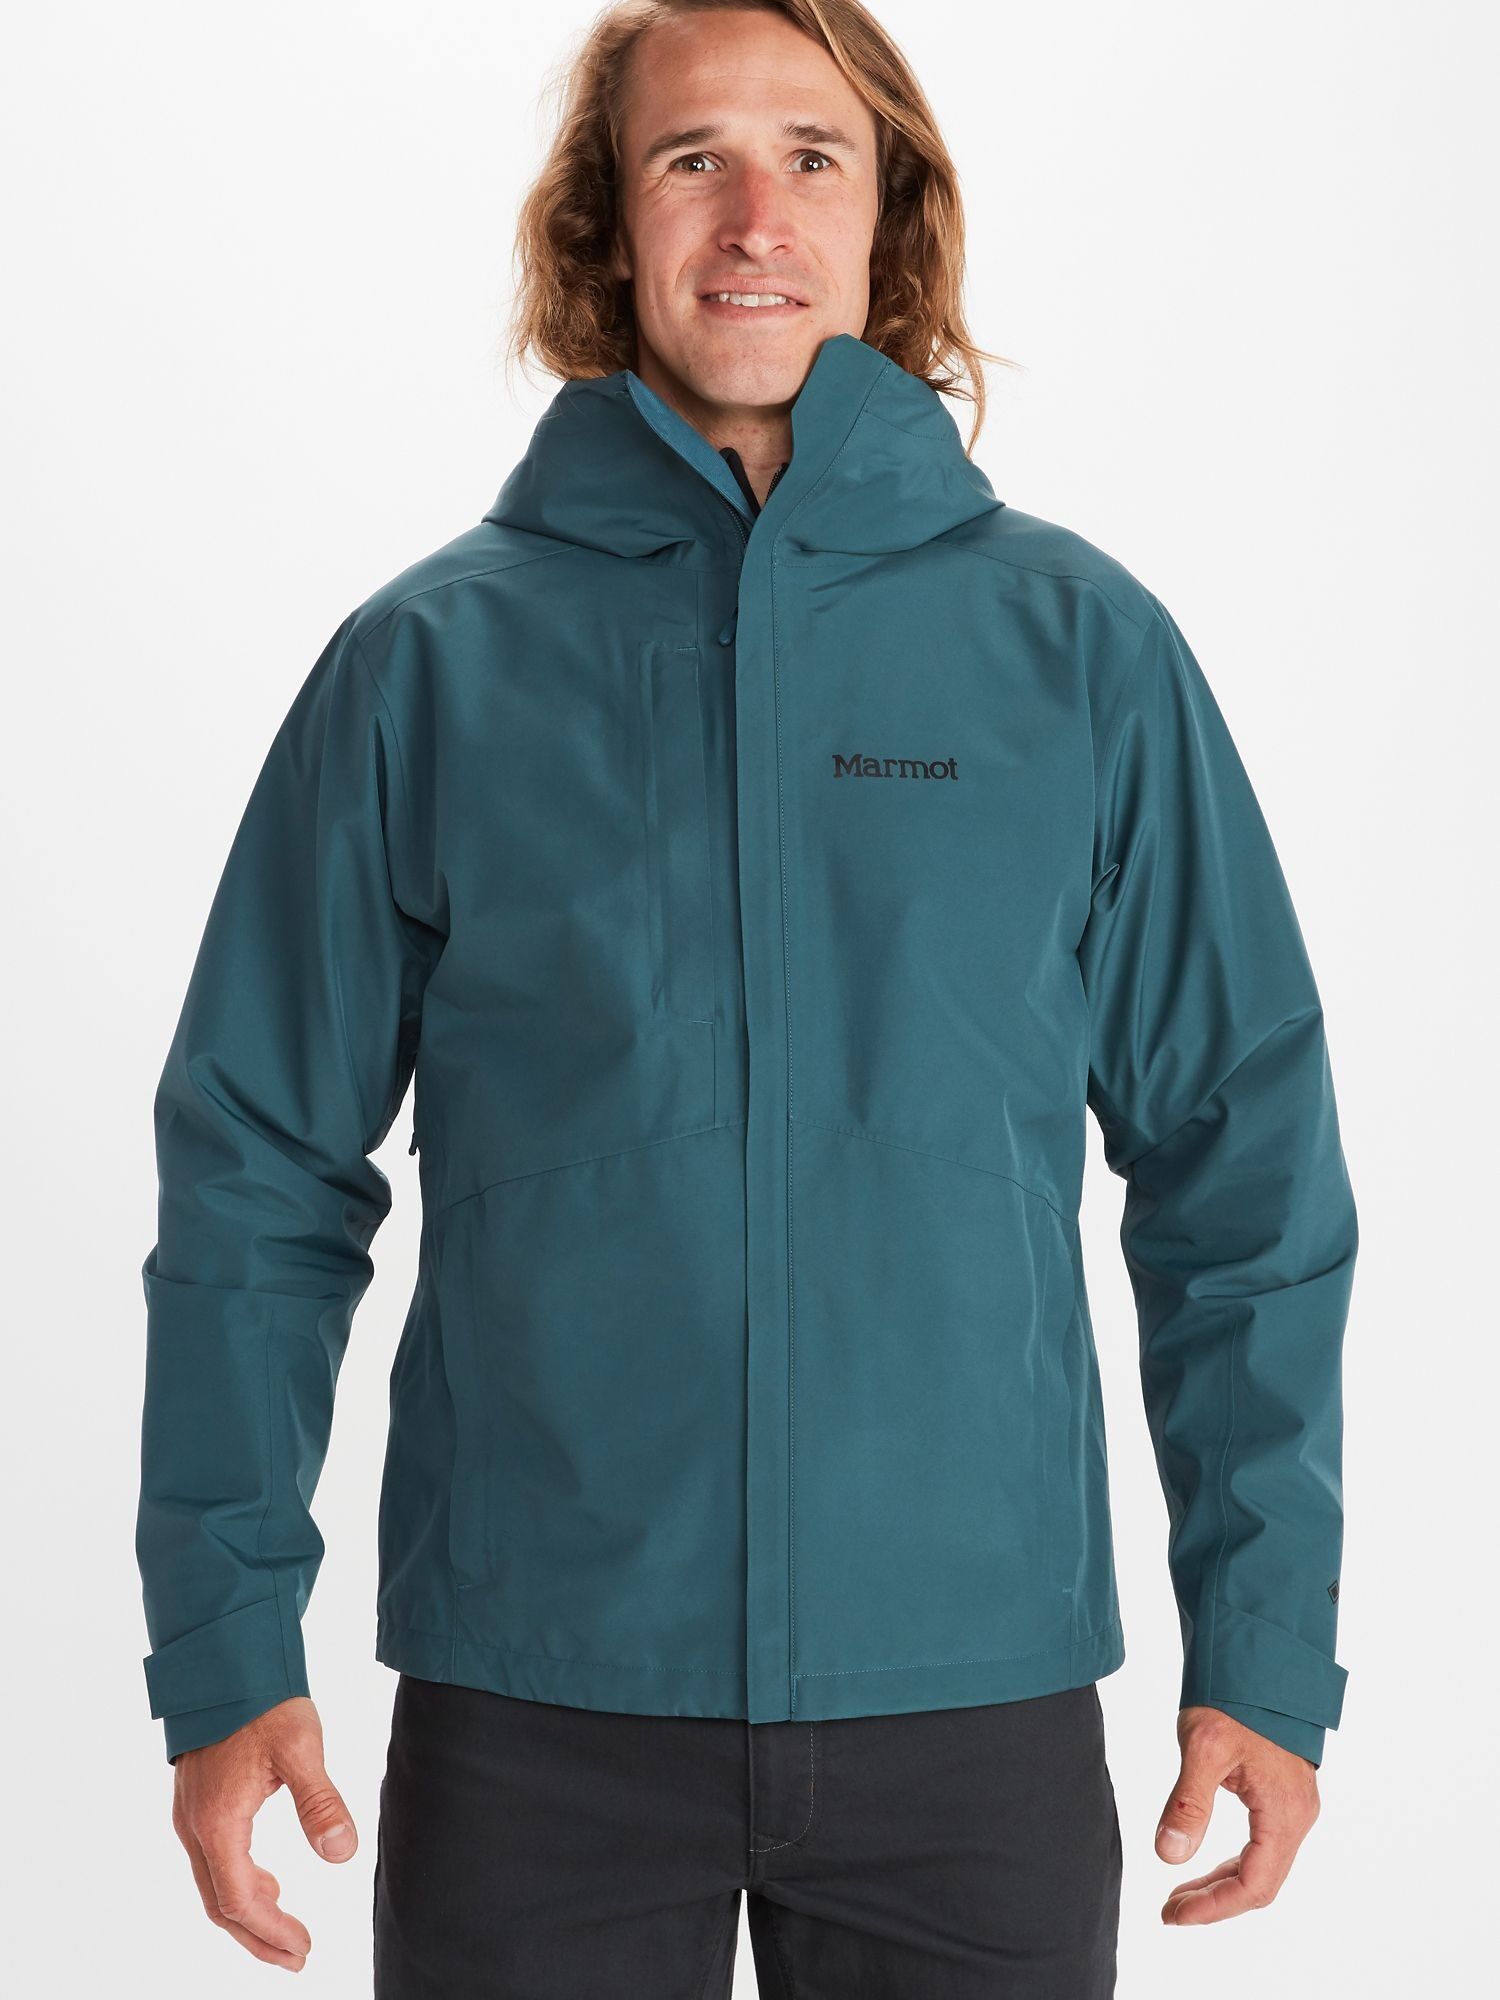 Marmot Minimalist Jacket - Chaqueta impermeable - Hombre